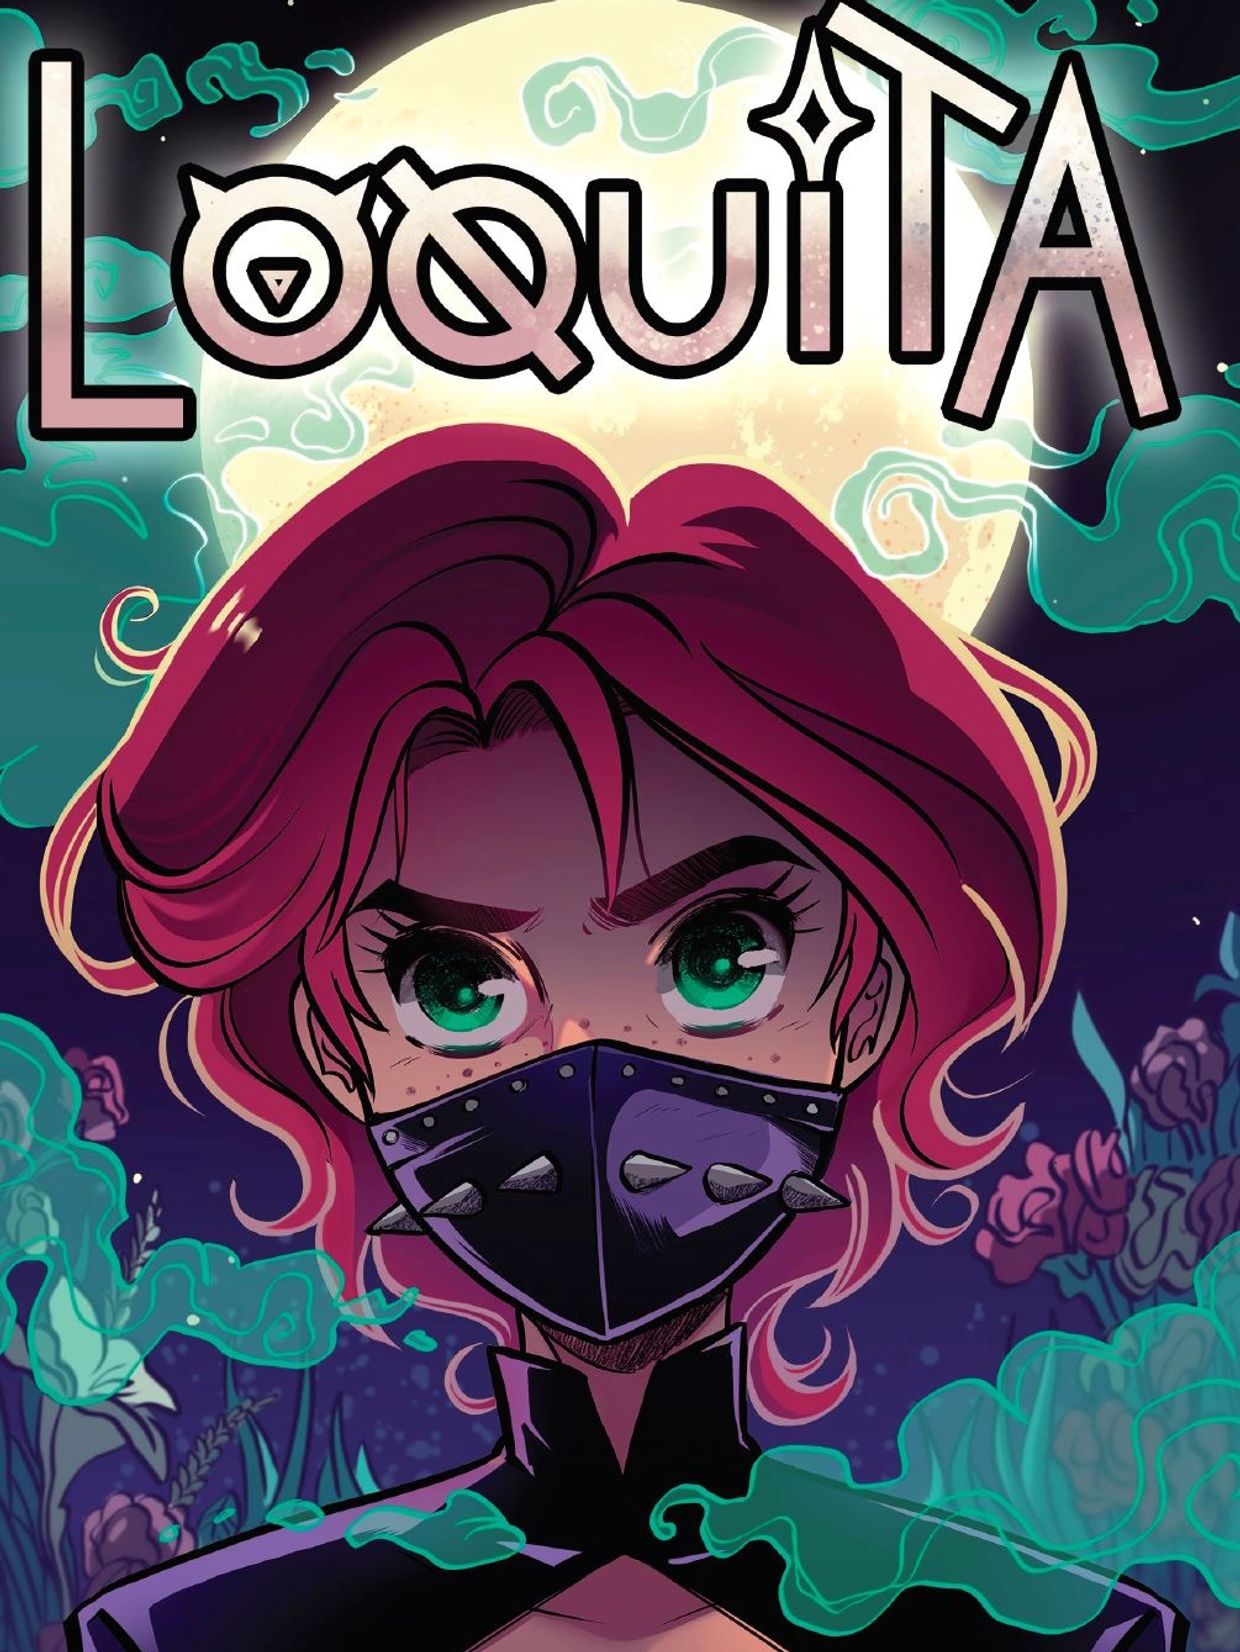 Loquita, Supernatural latina superhero